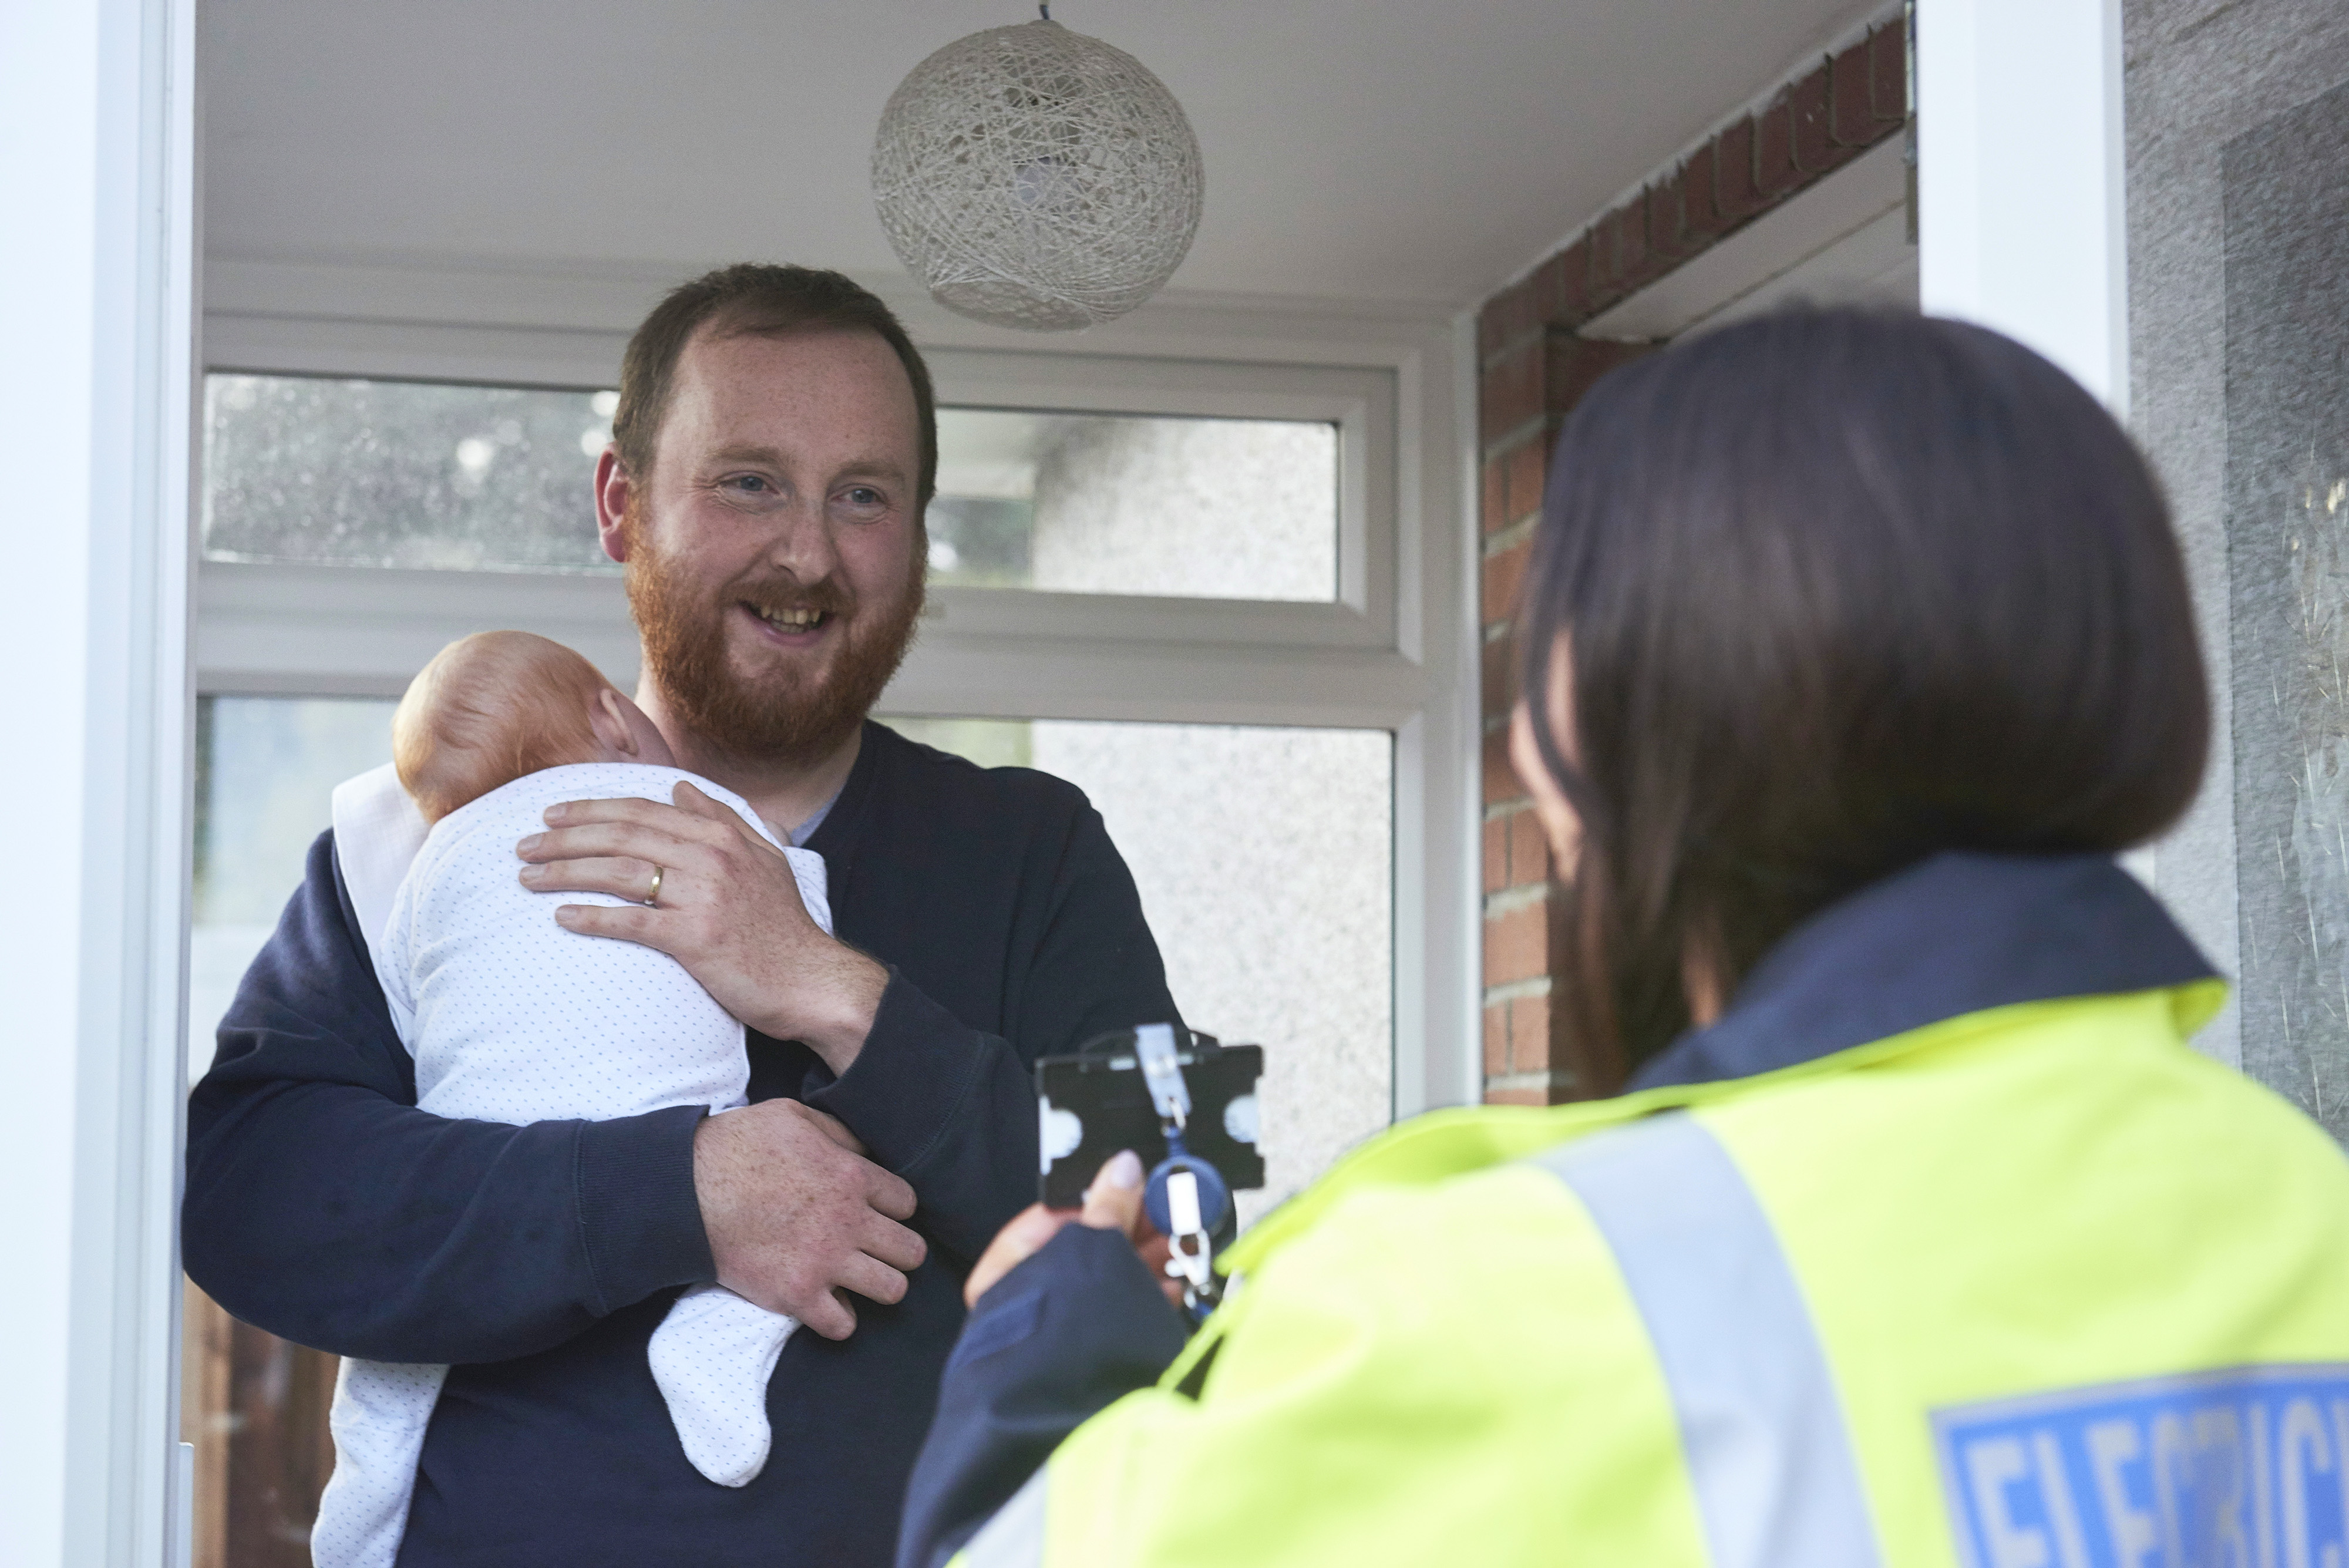 Man with baby at door with SSEN employee